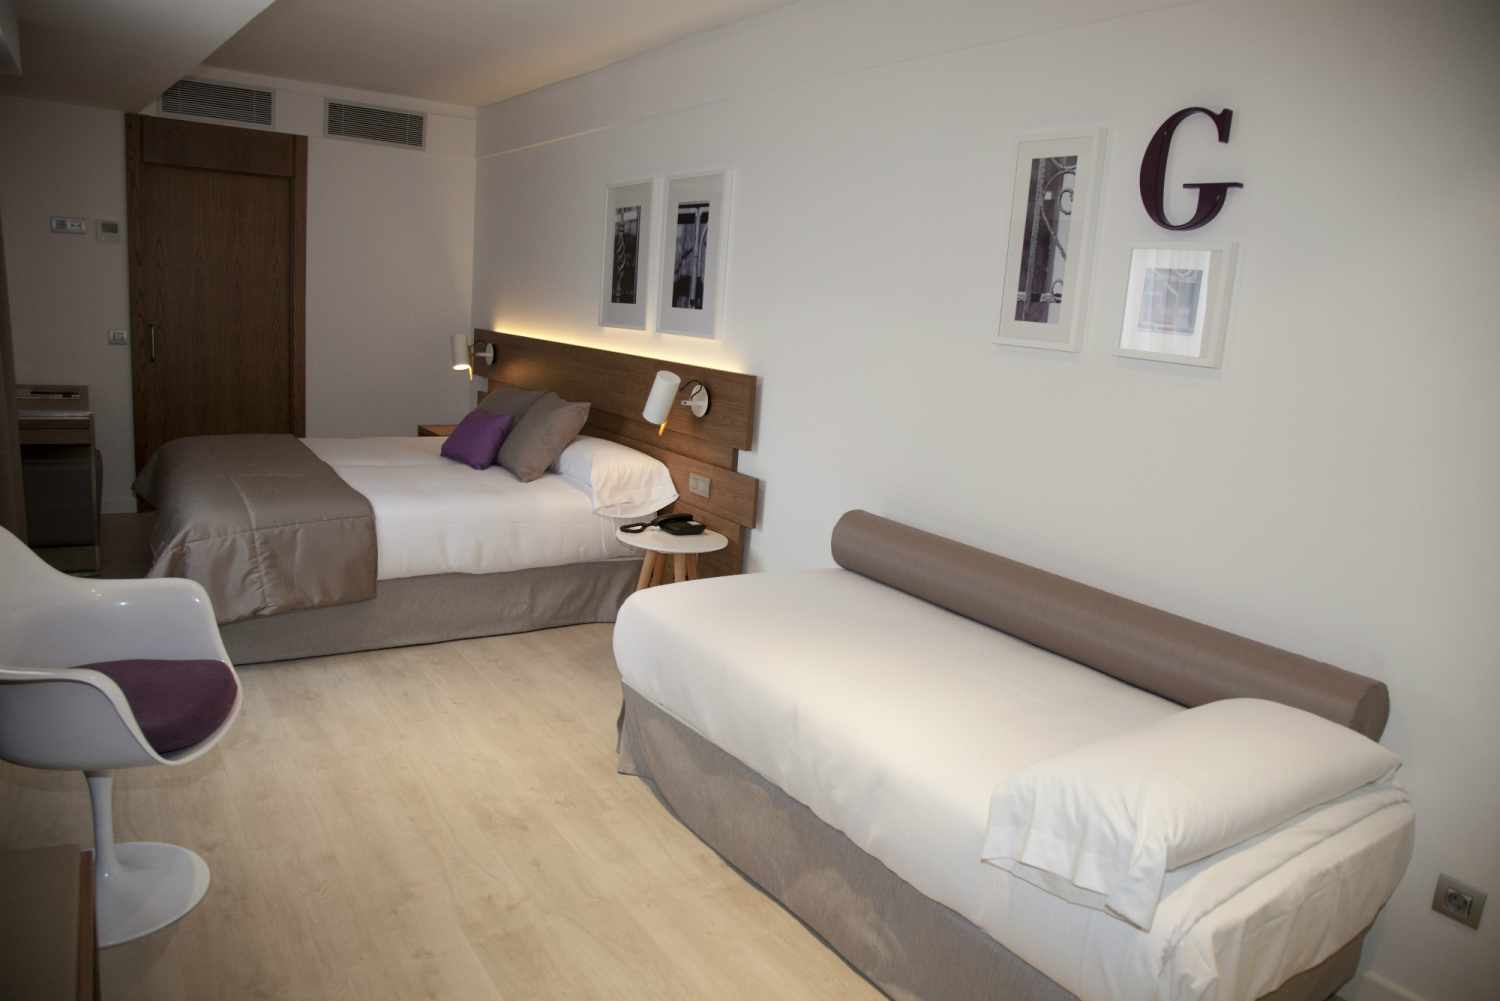 Hotel Gelmirez